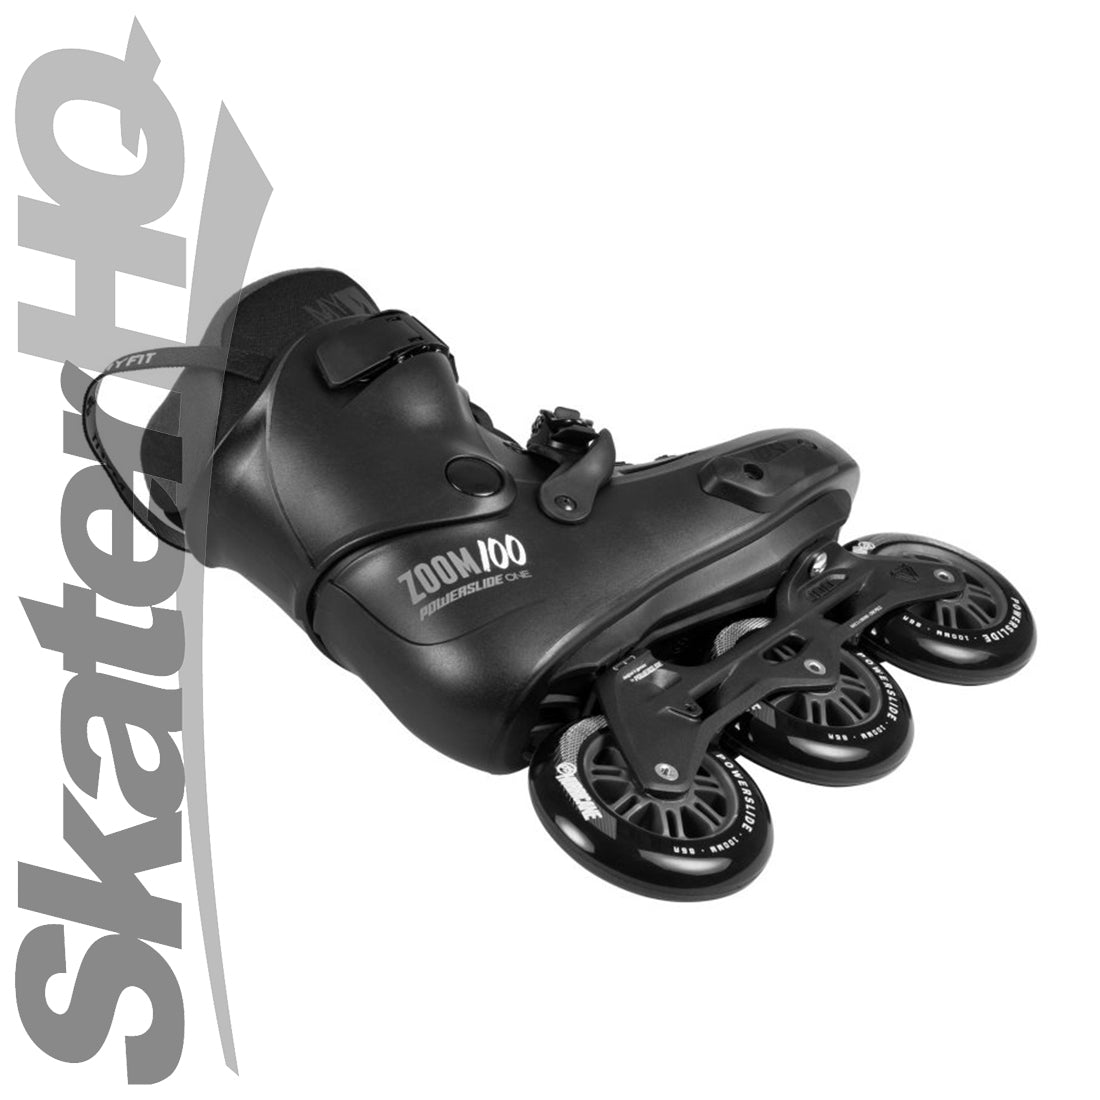 Powerslide Zoom Pro 100 EU41-42 8-9US Inline Rec Skates